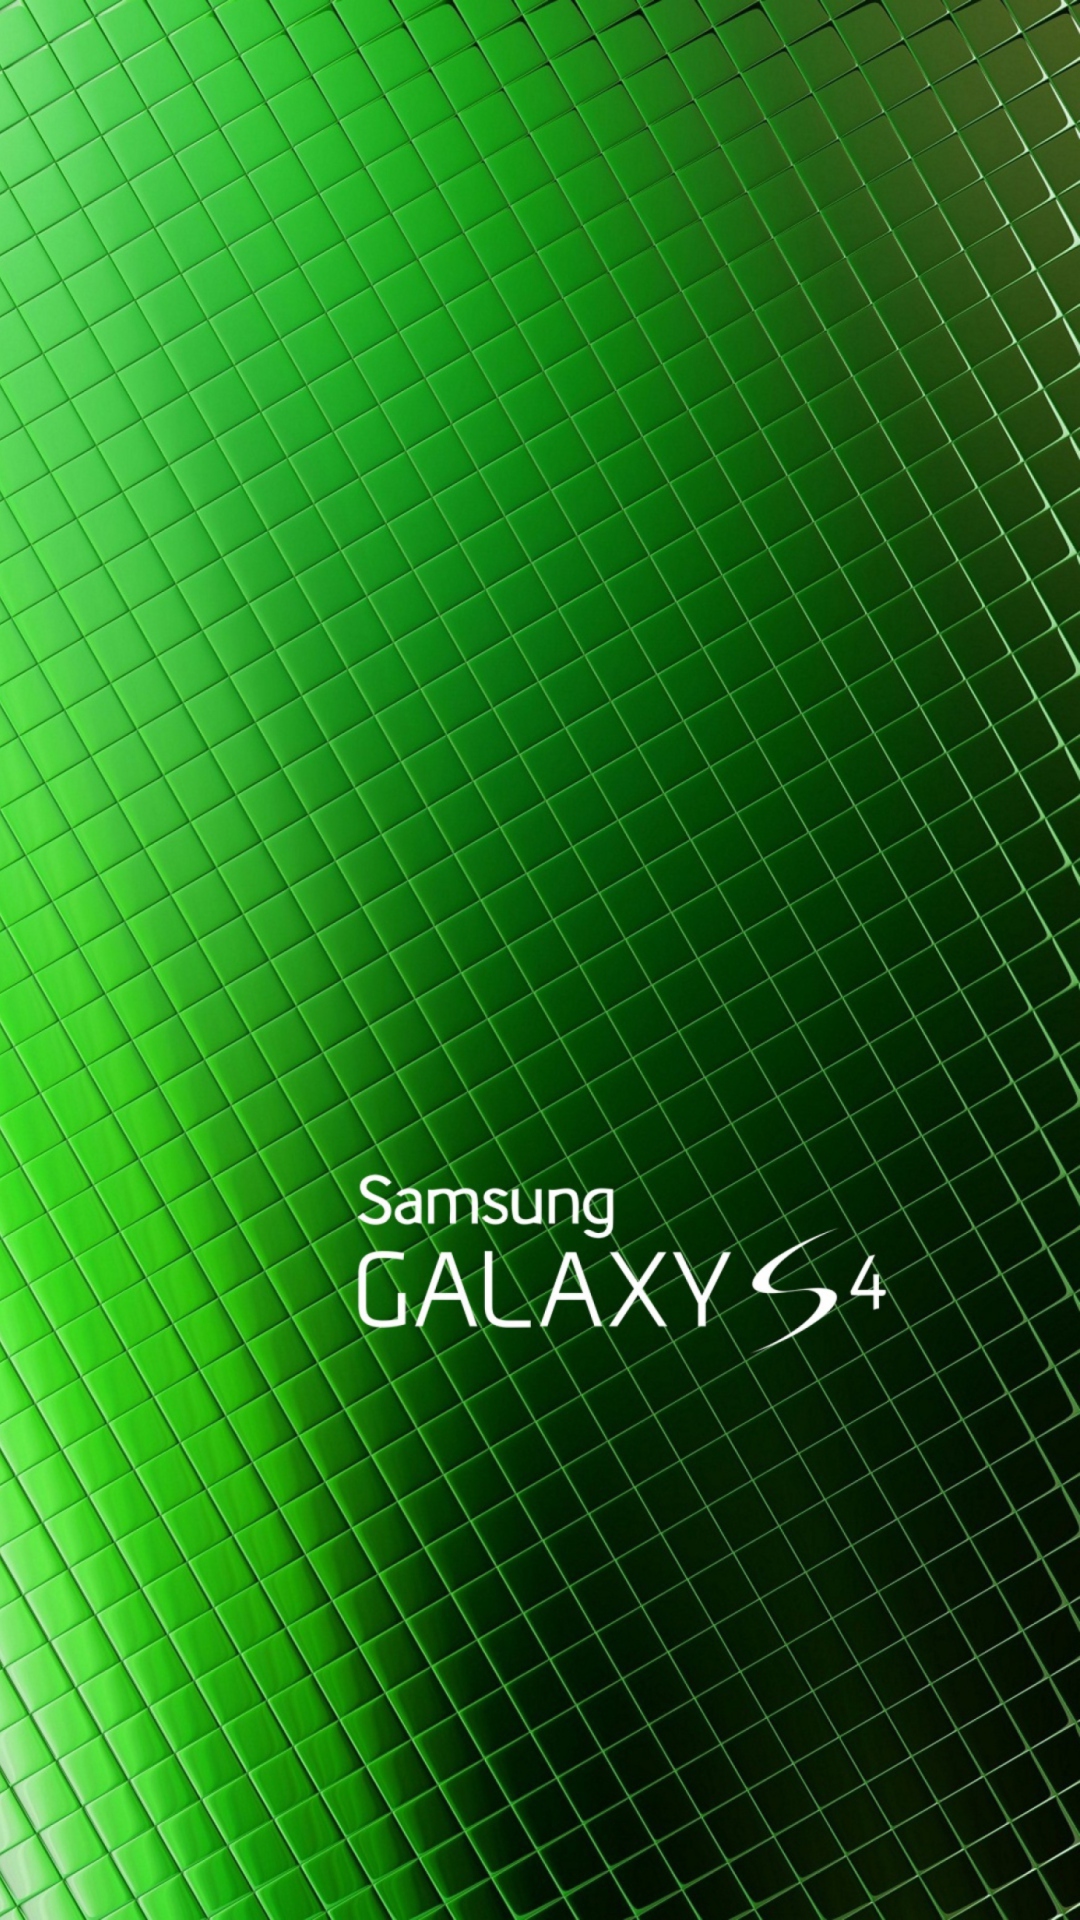 samsung galaxy s4 wallpaper 1080 x 1920